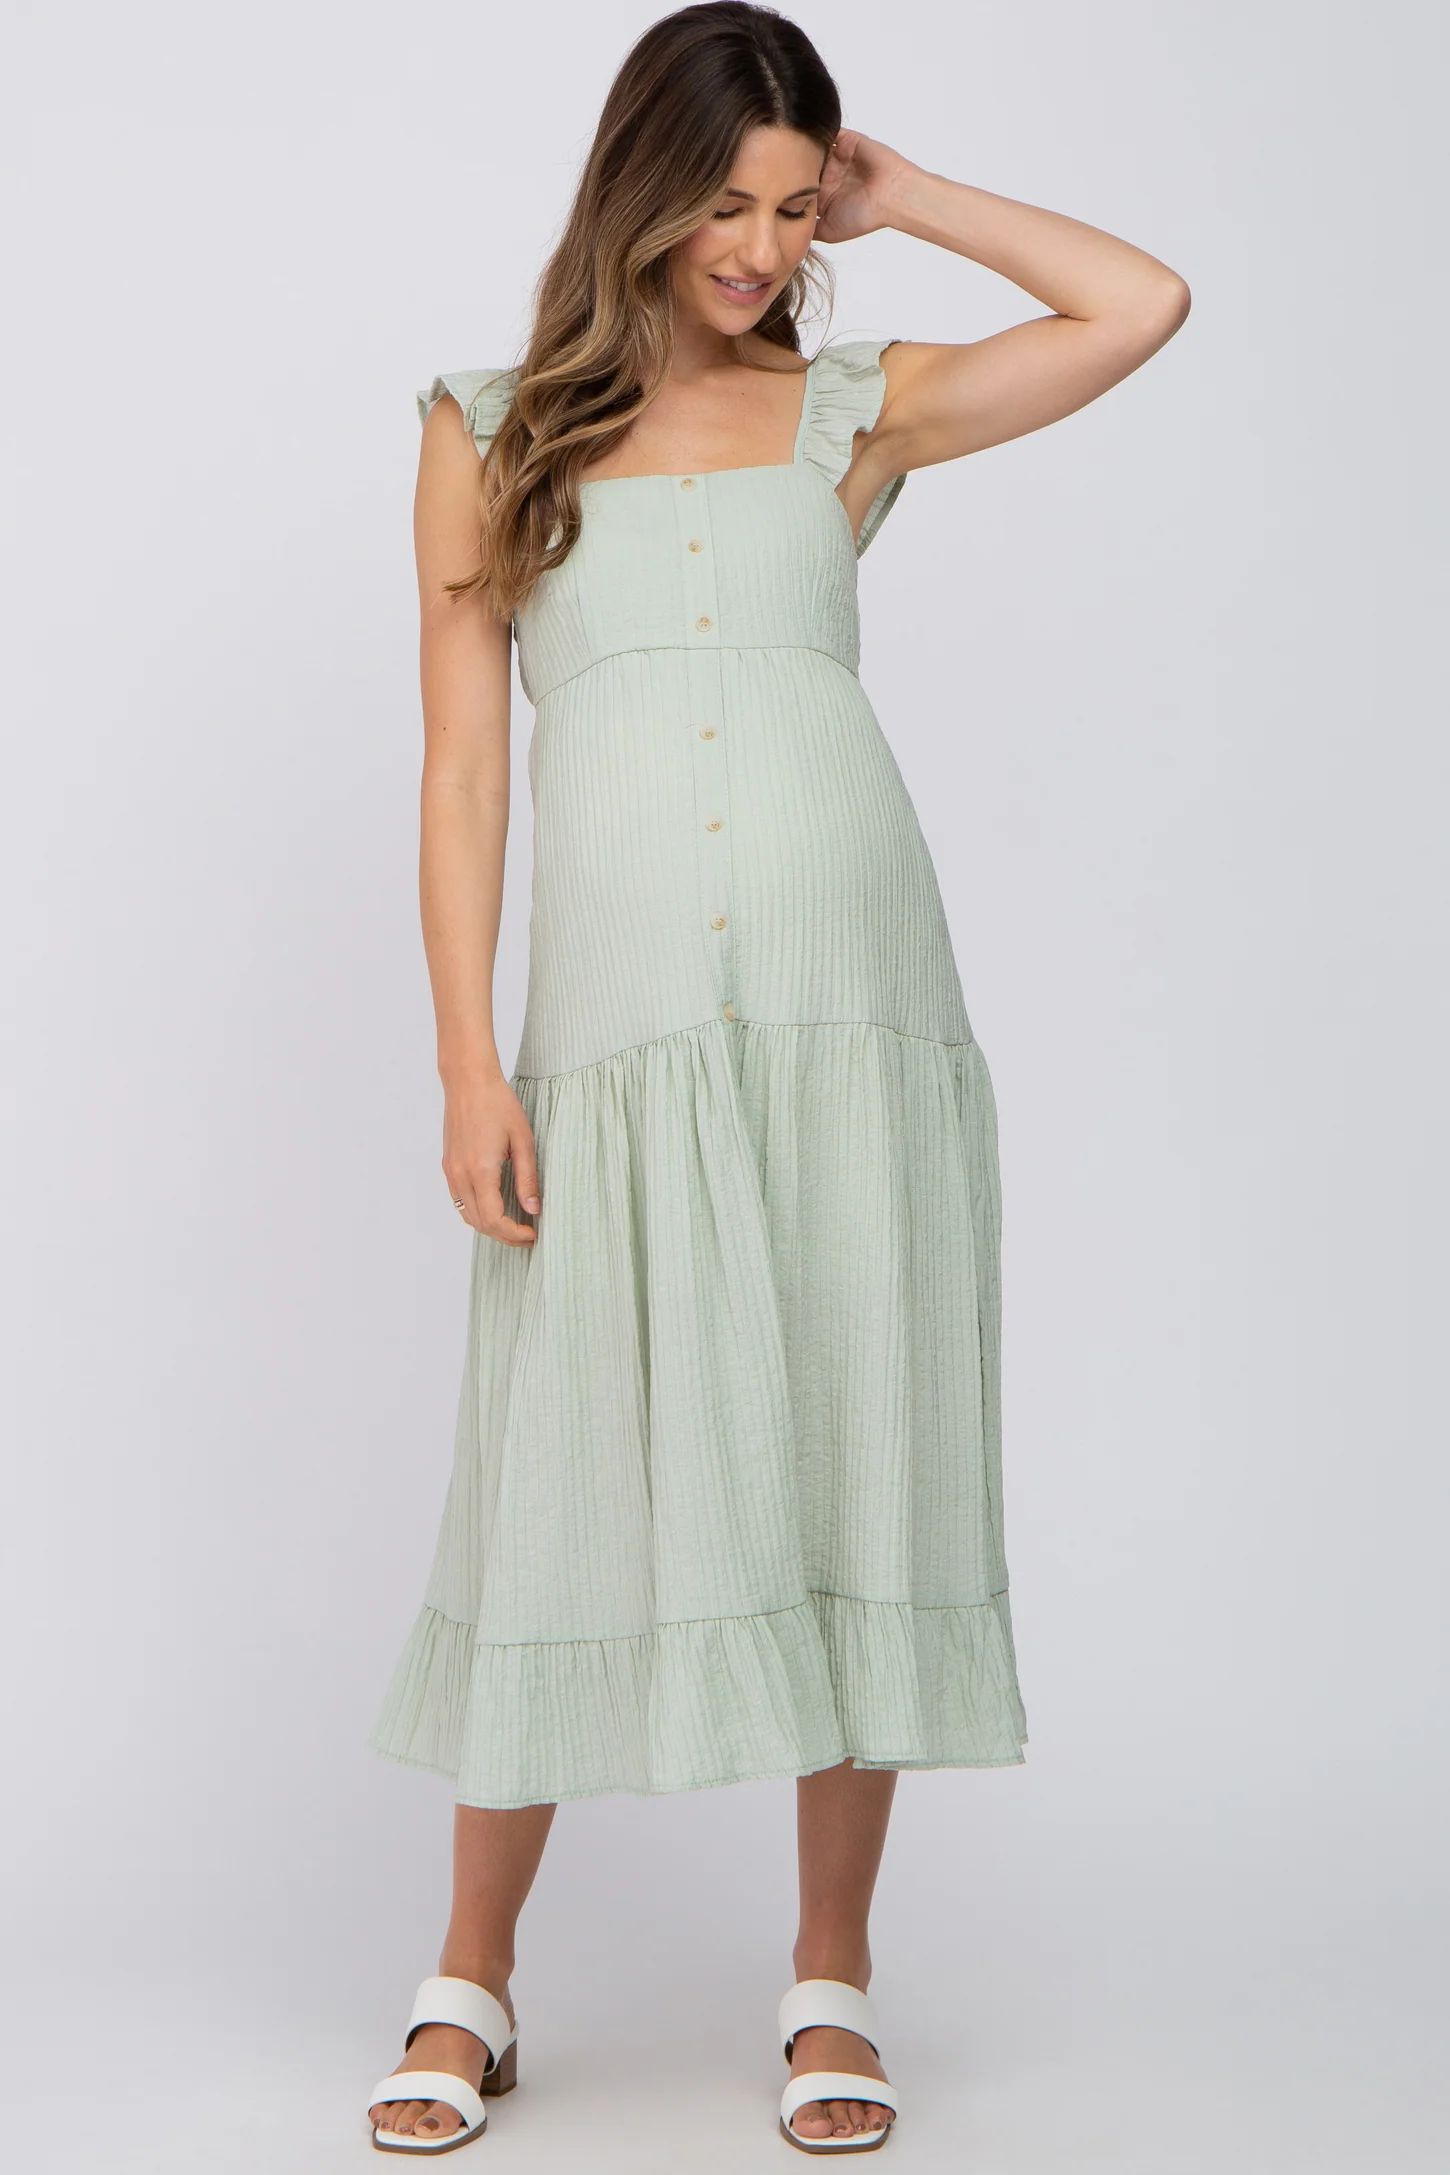 Mint Green Textured Stripe Squared Neck Tiered Maternity Midi Dress | PinkBlush Maternity